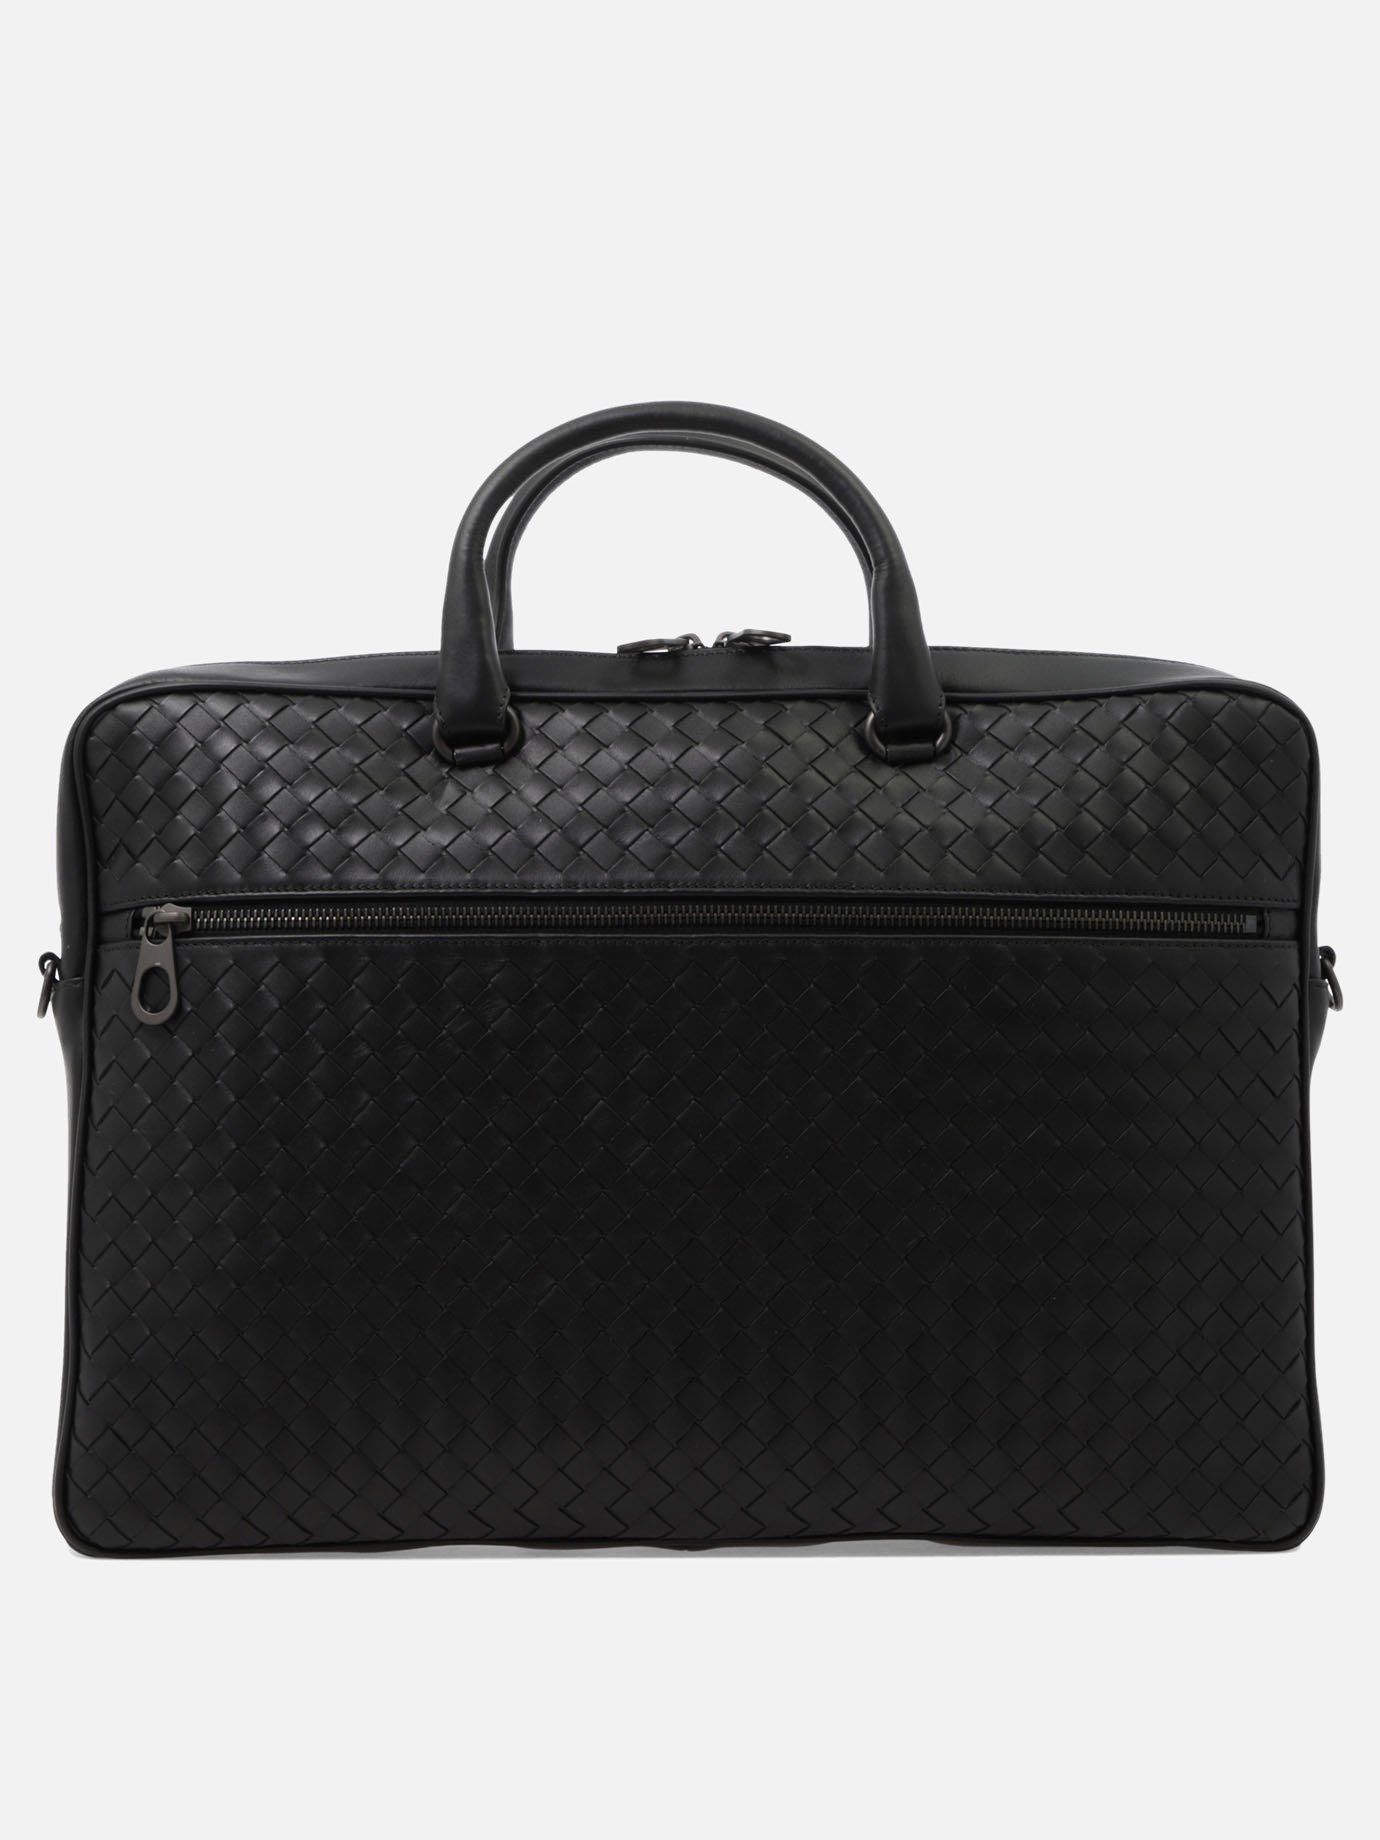 Woven leather handbagby Bottega Veneta - 5